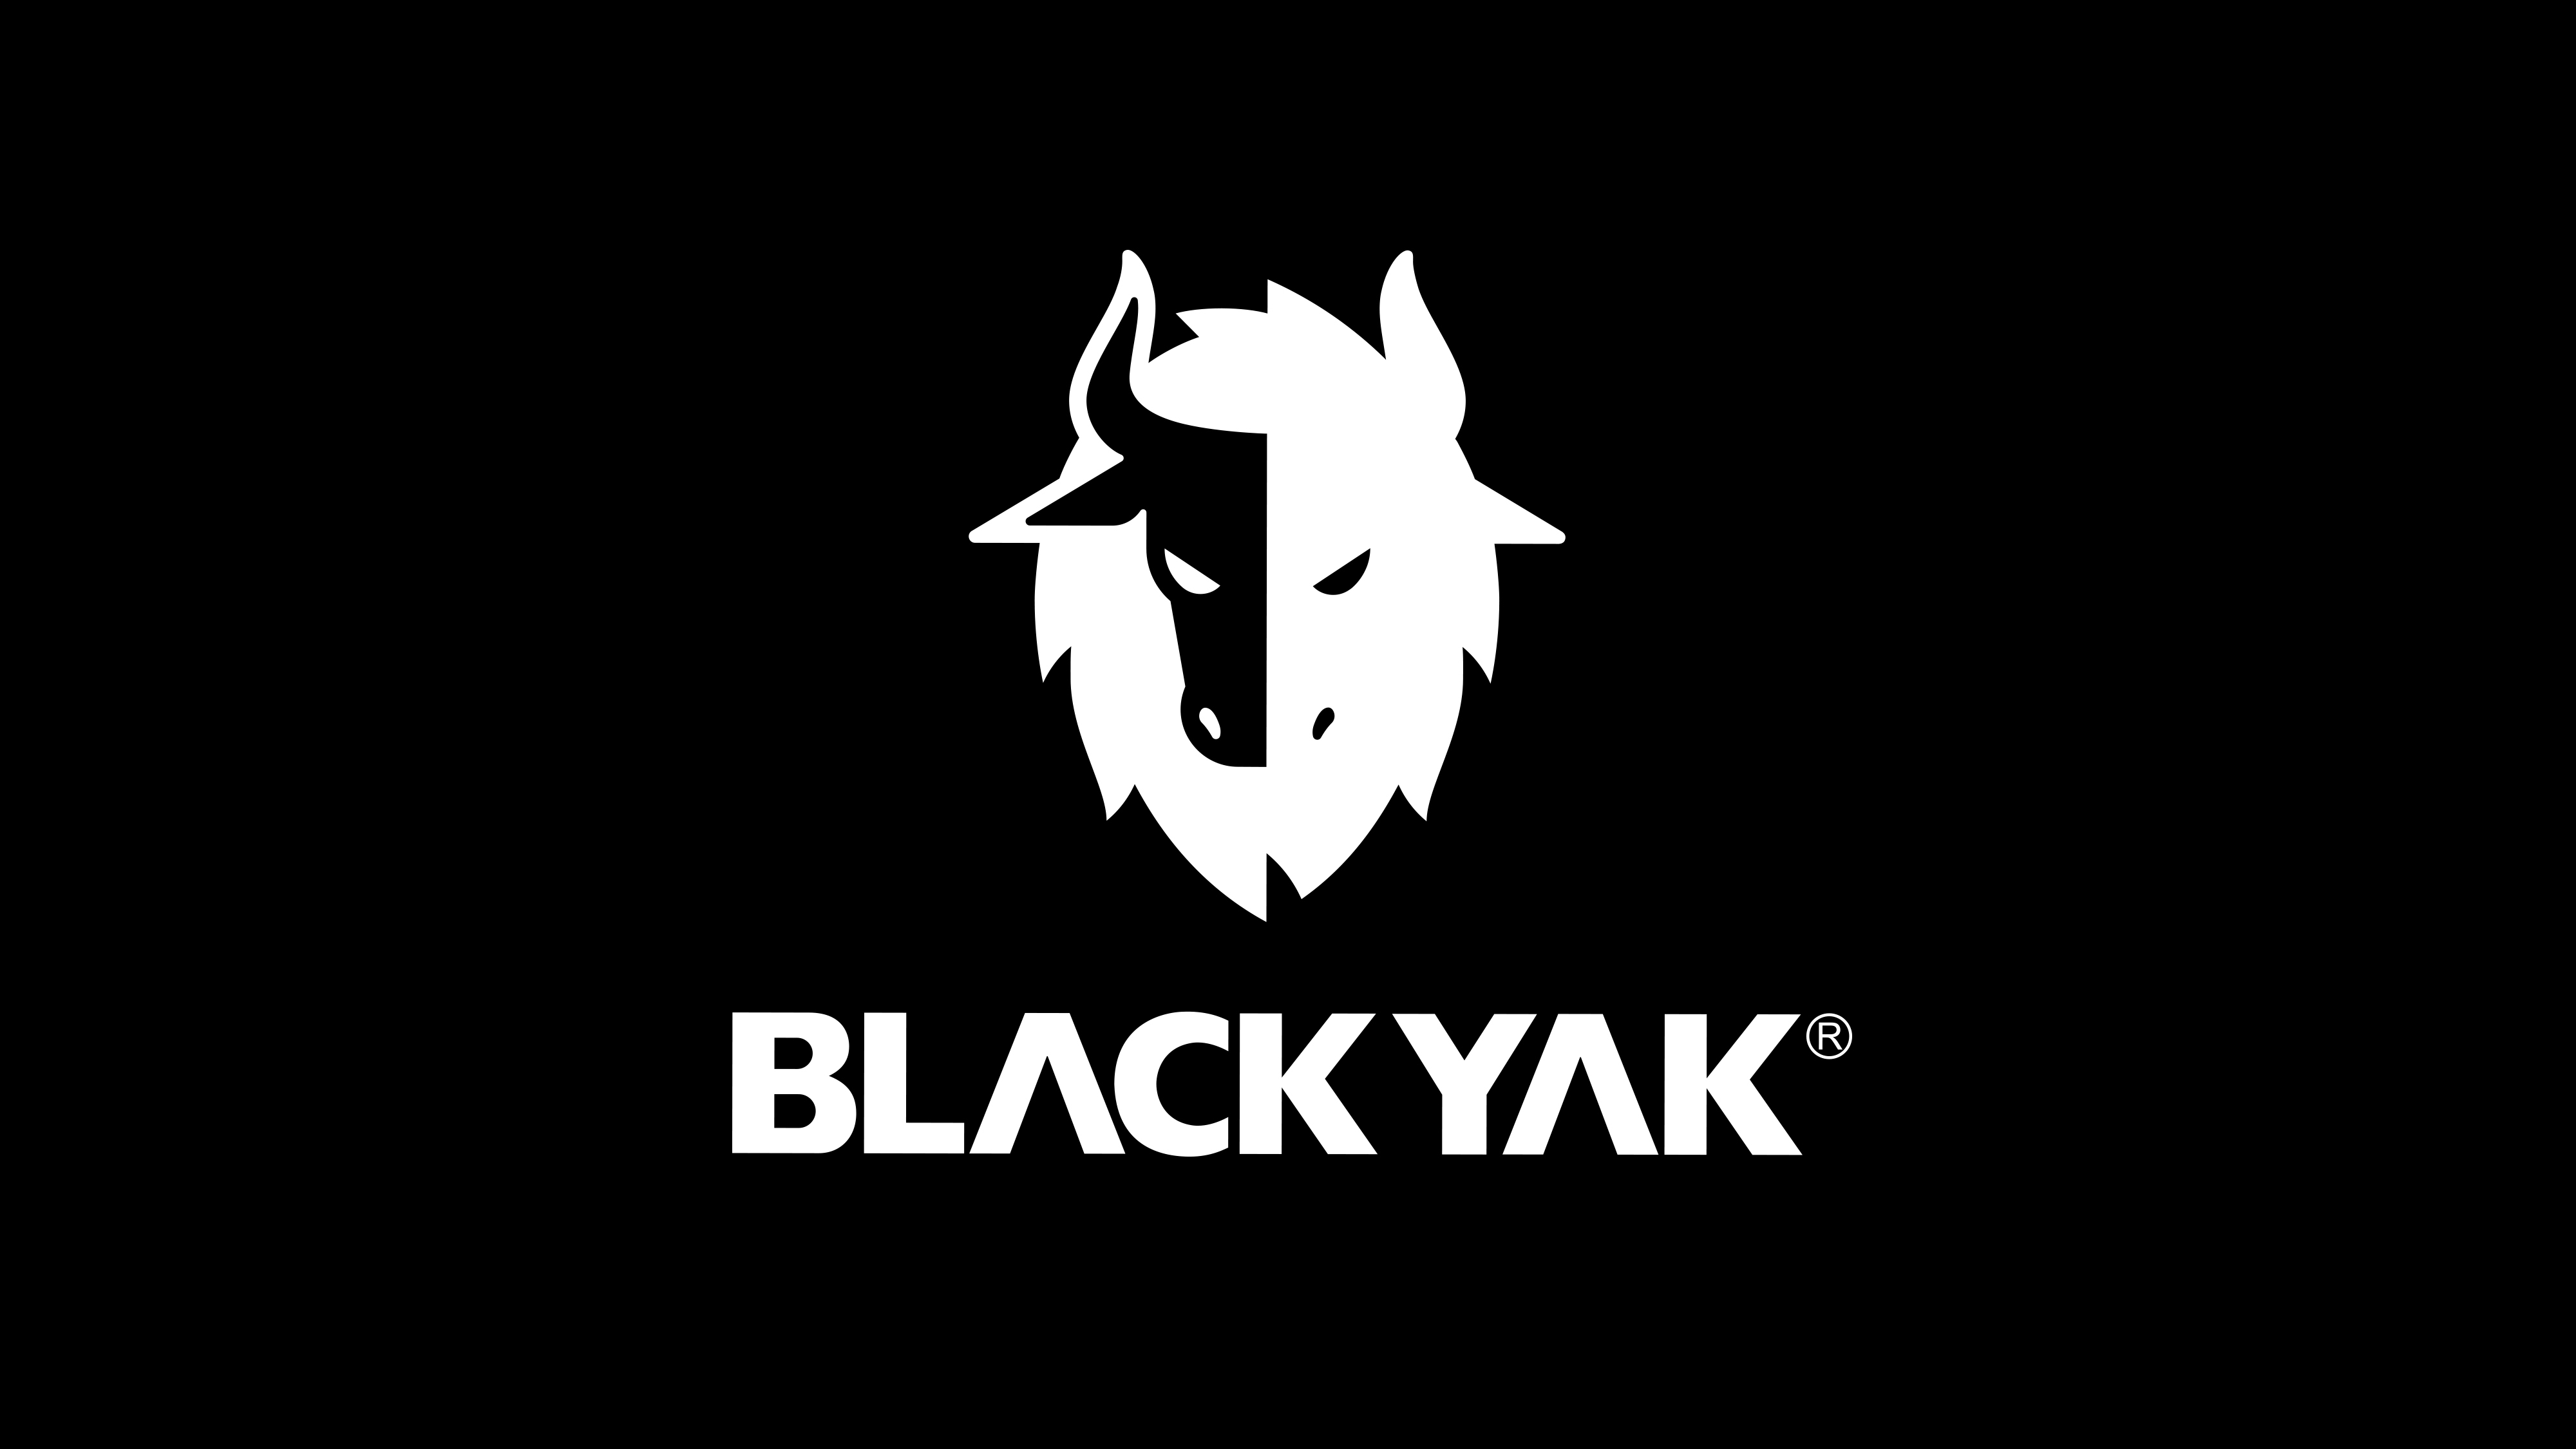 BlackYak